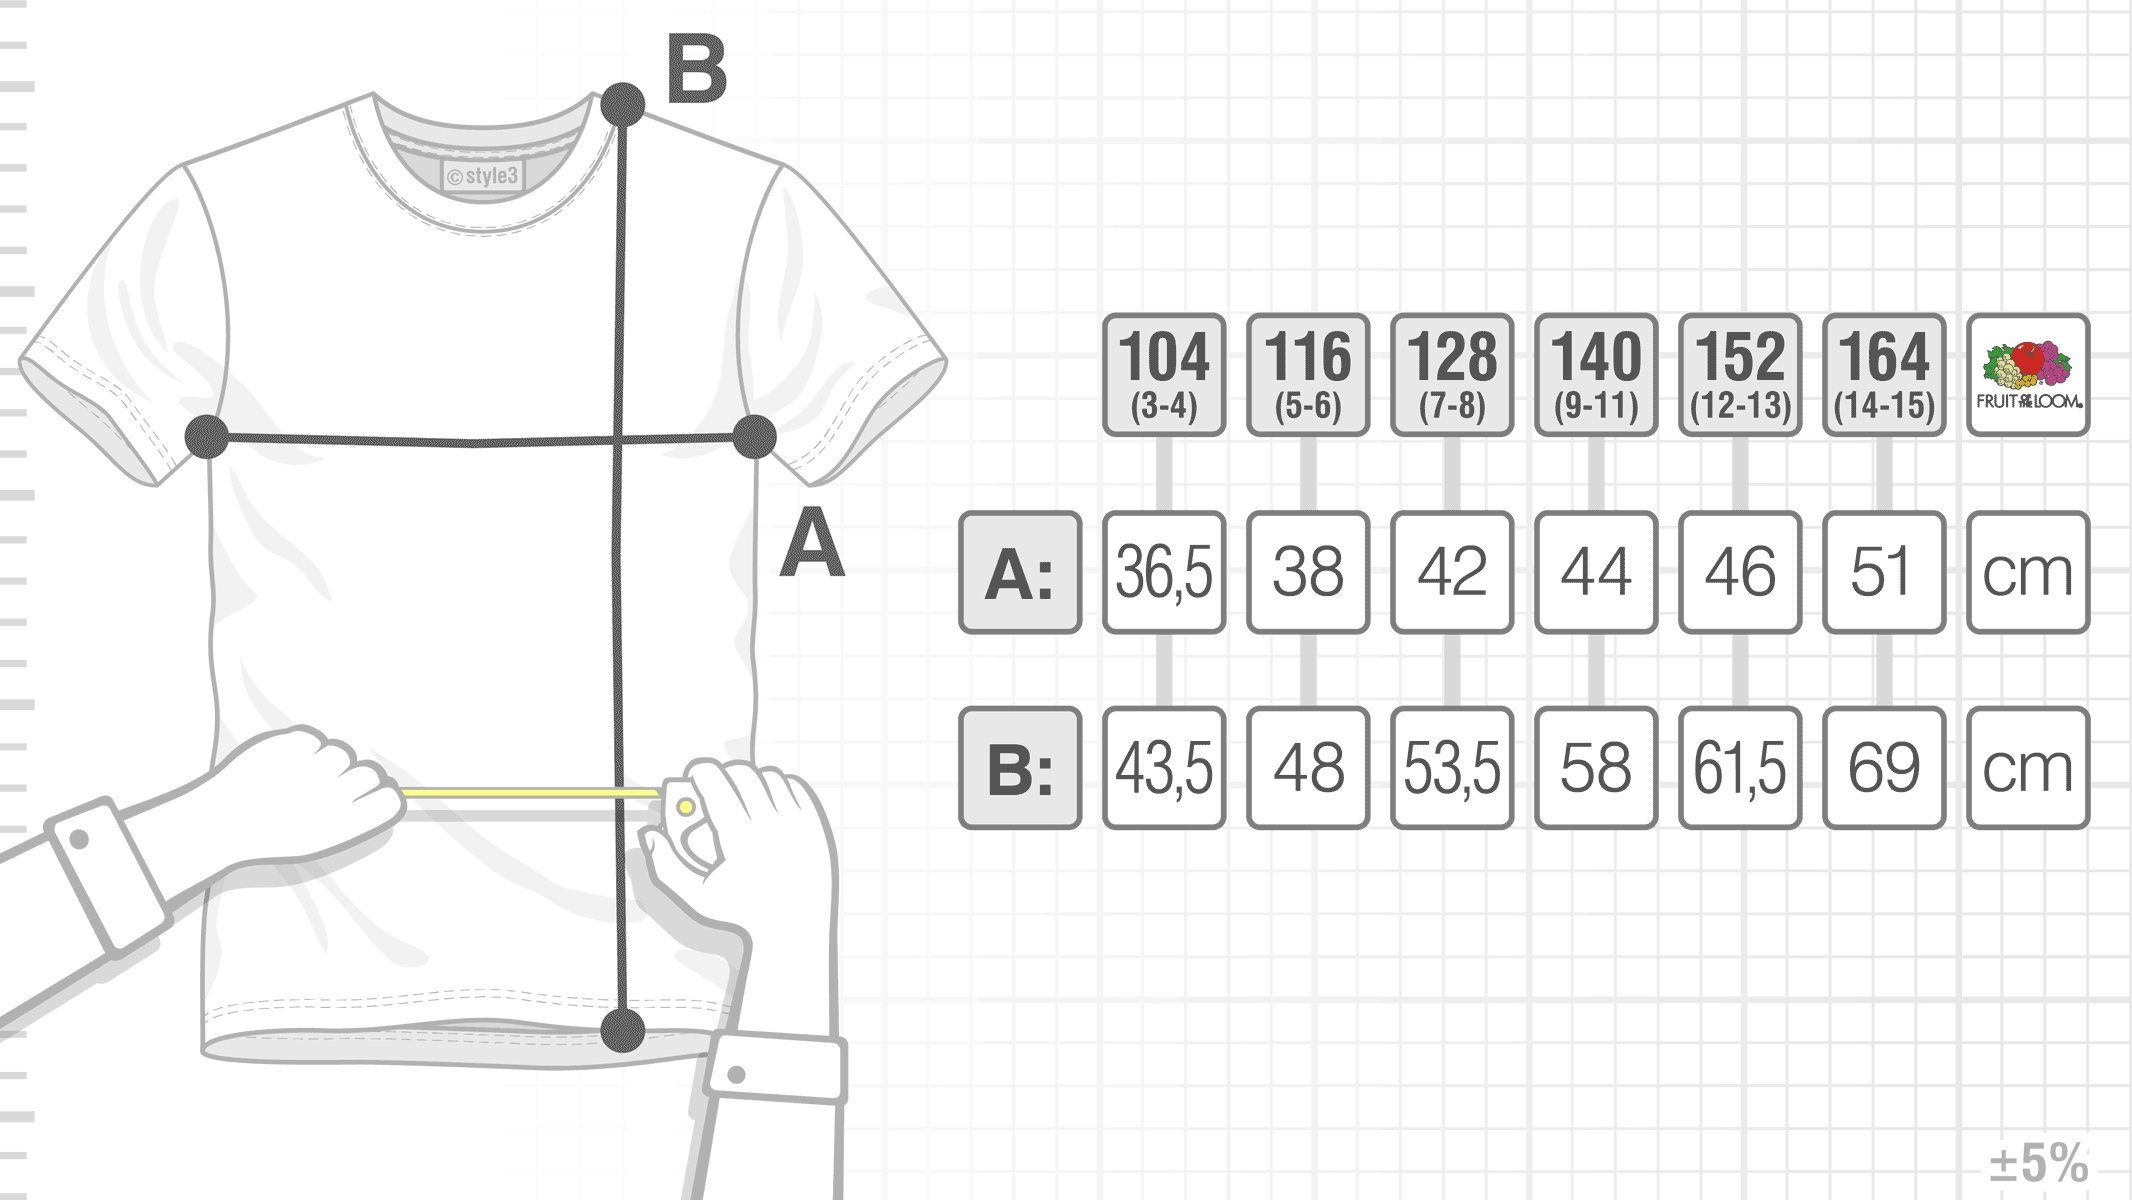 controller videospiel Kinder style3 Blaupause Print-Shirt Boy T-Shirt Virtual weiß 32-Bit